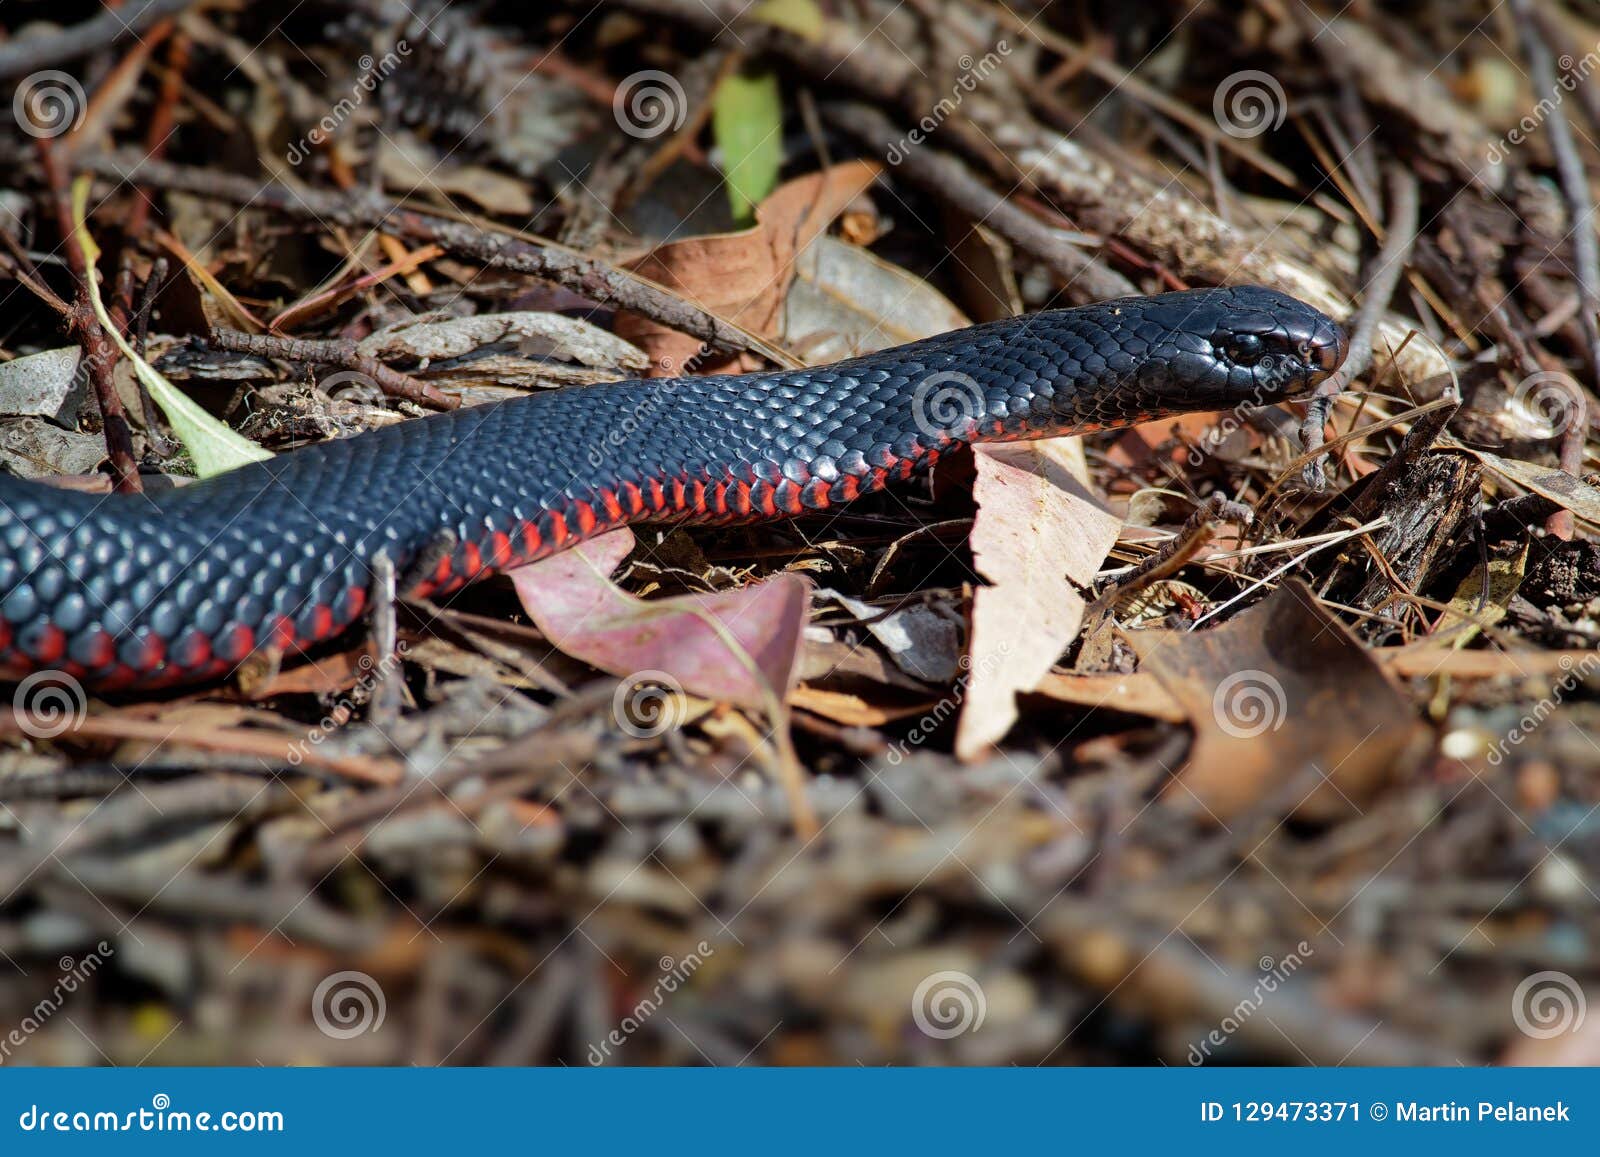 red-bellied black snake - pseudechis porphyriacus species of elapid snake native to eastern australia